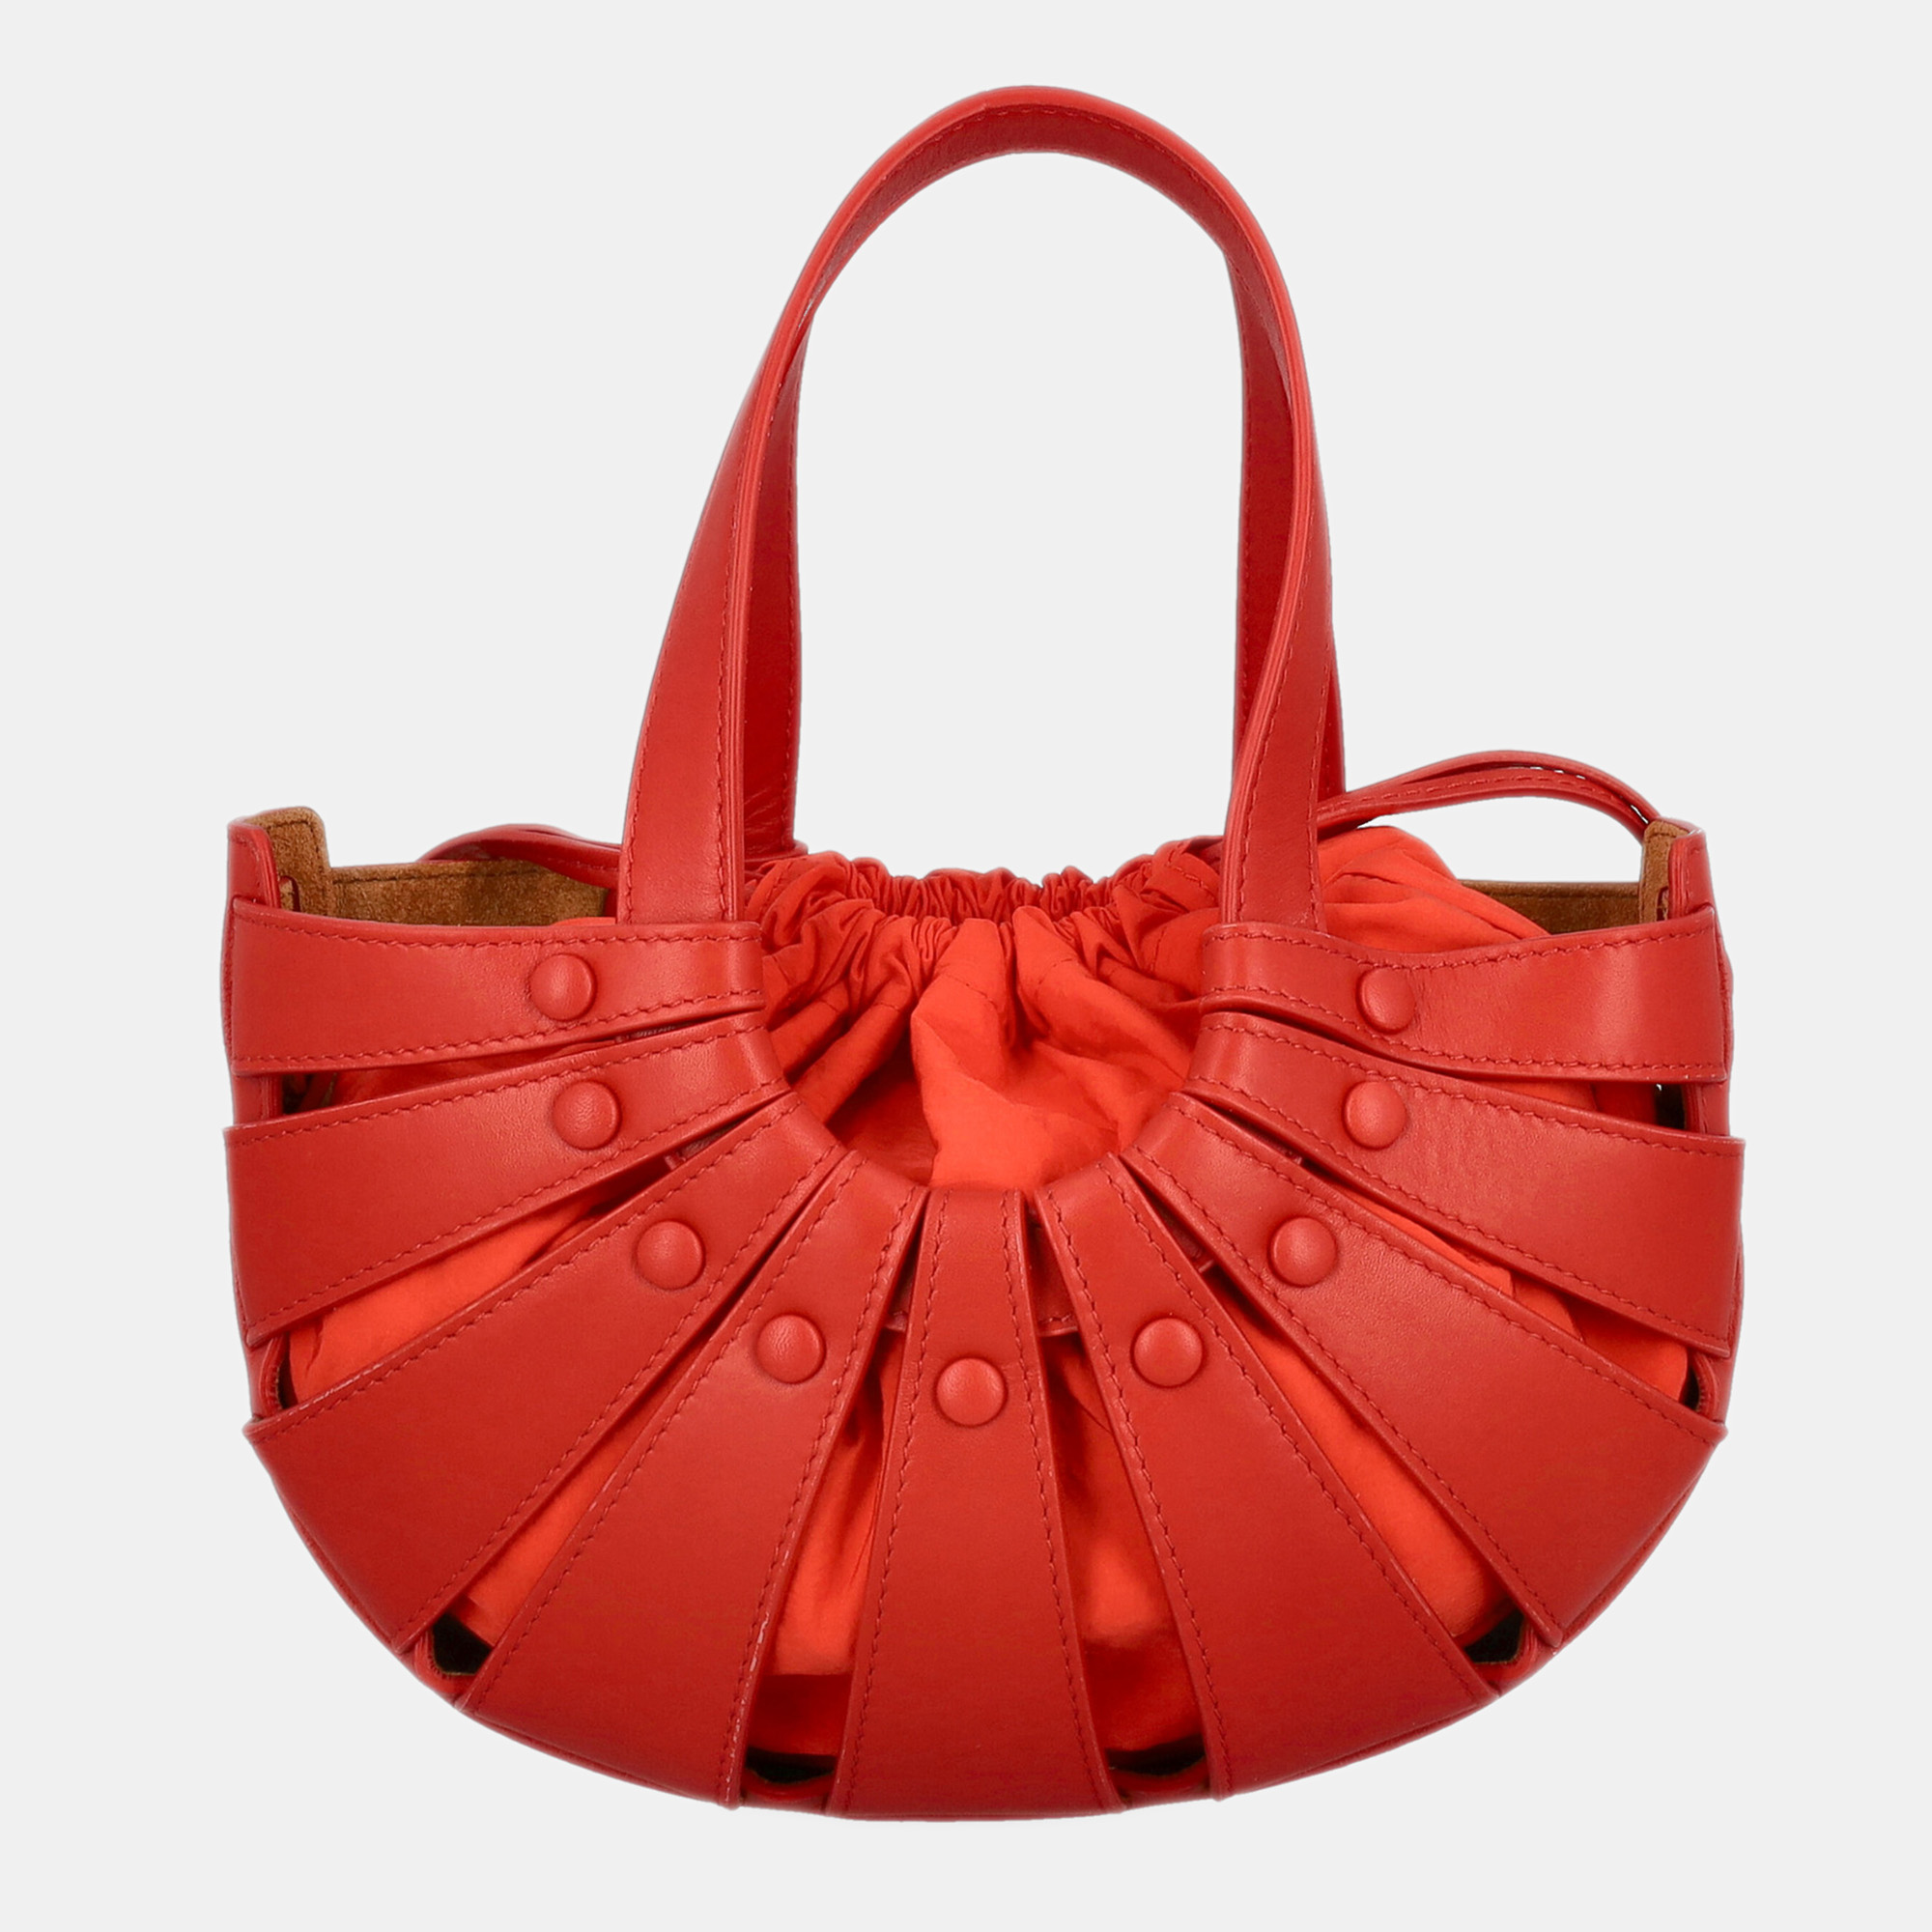 Bottega Veneta  Women's Leather Tote Bag - Red - One Size